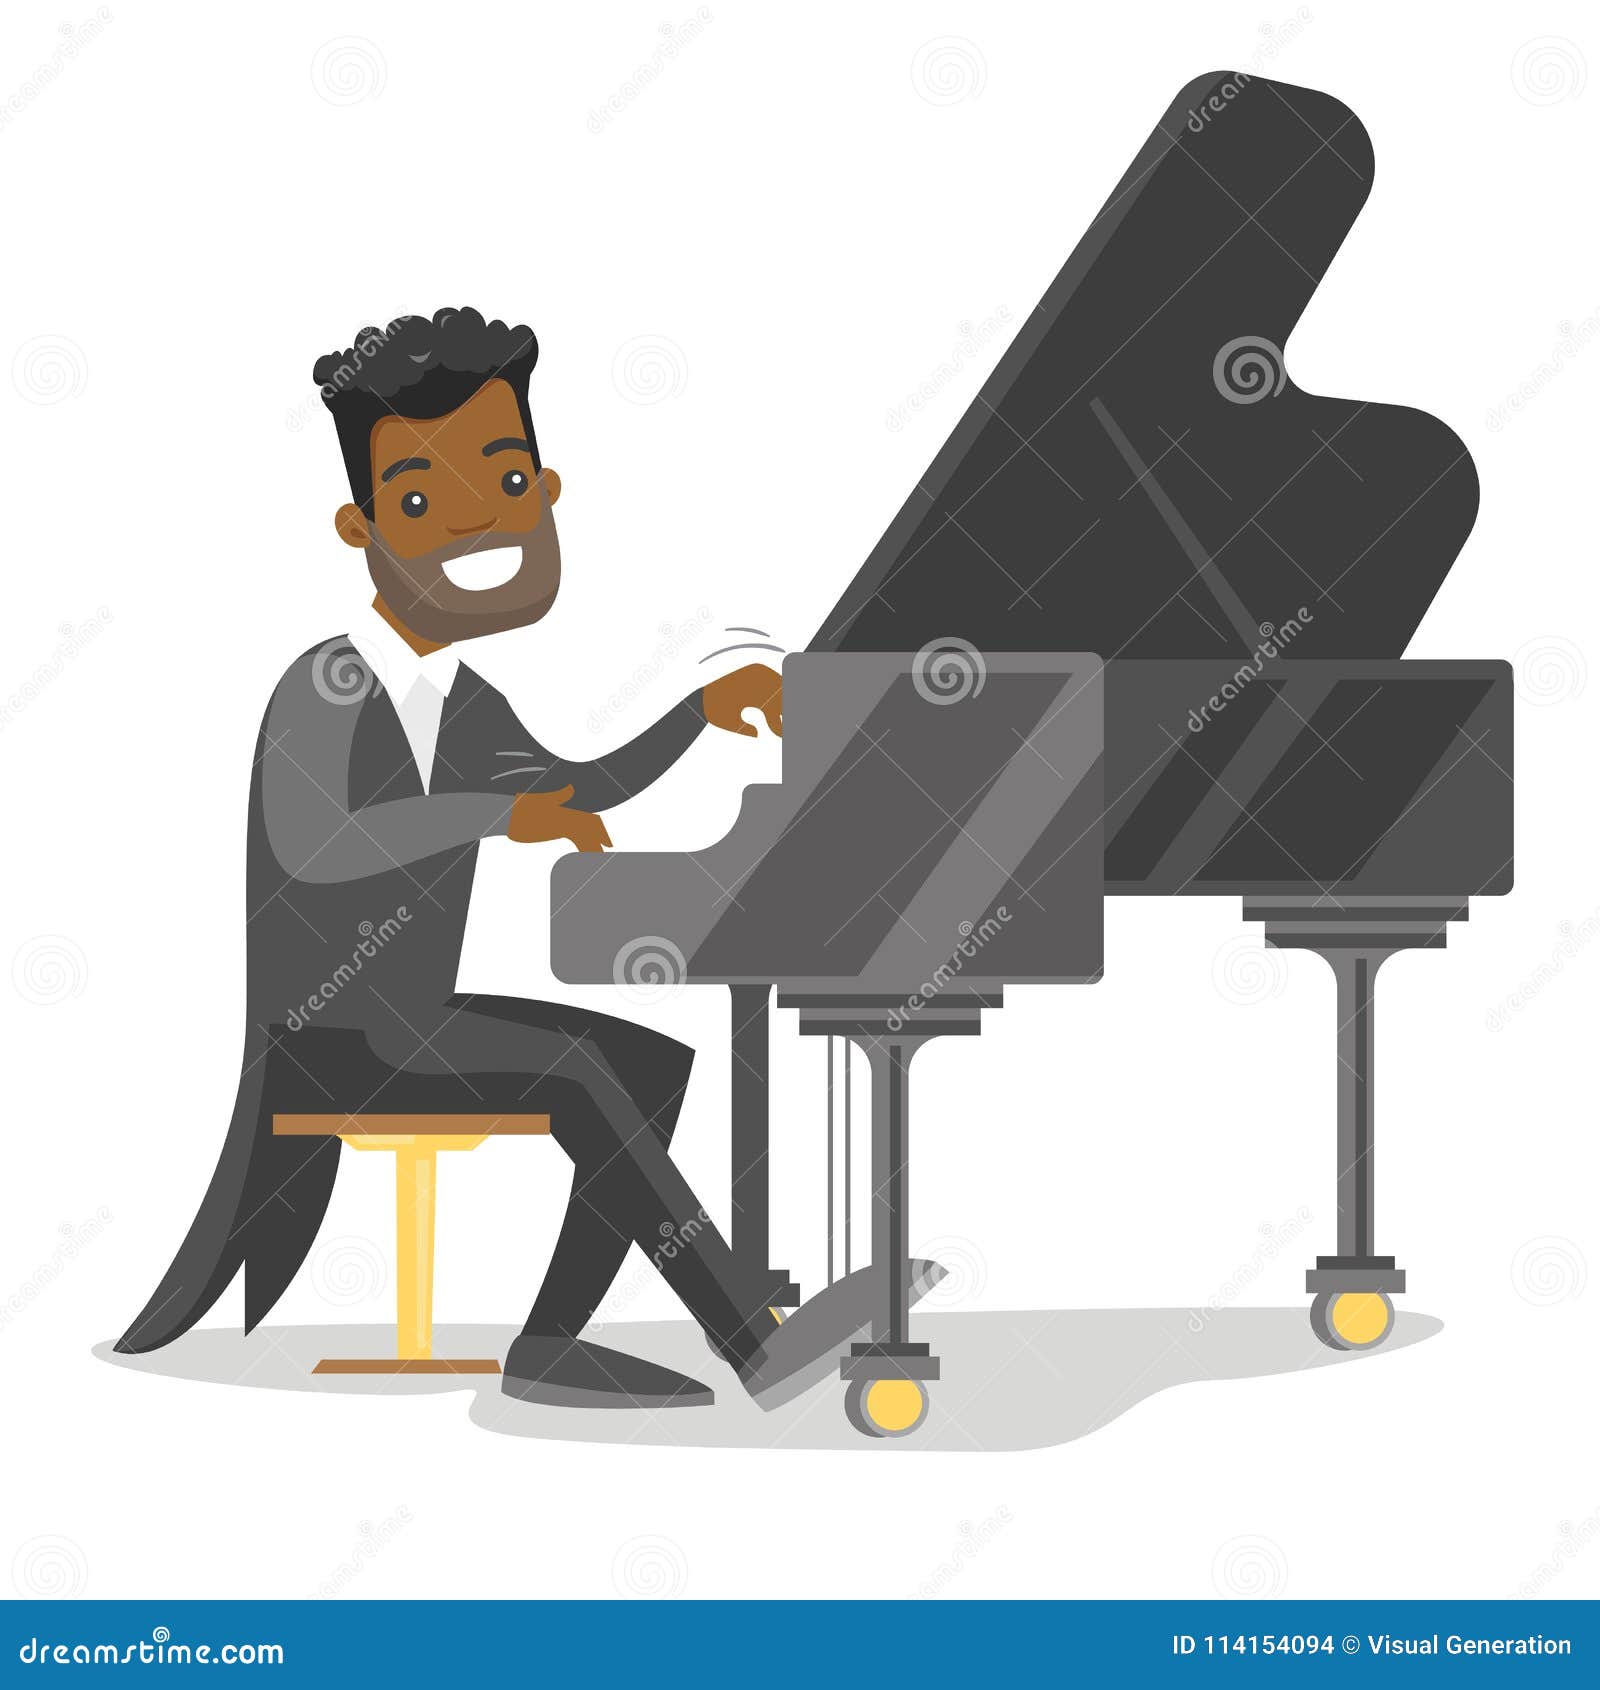 He can play piano. Пианист вектор. Пианист за фортепиано вектор. Пианистка мультяшная. Человек за пианино вектор.